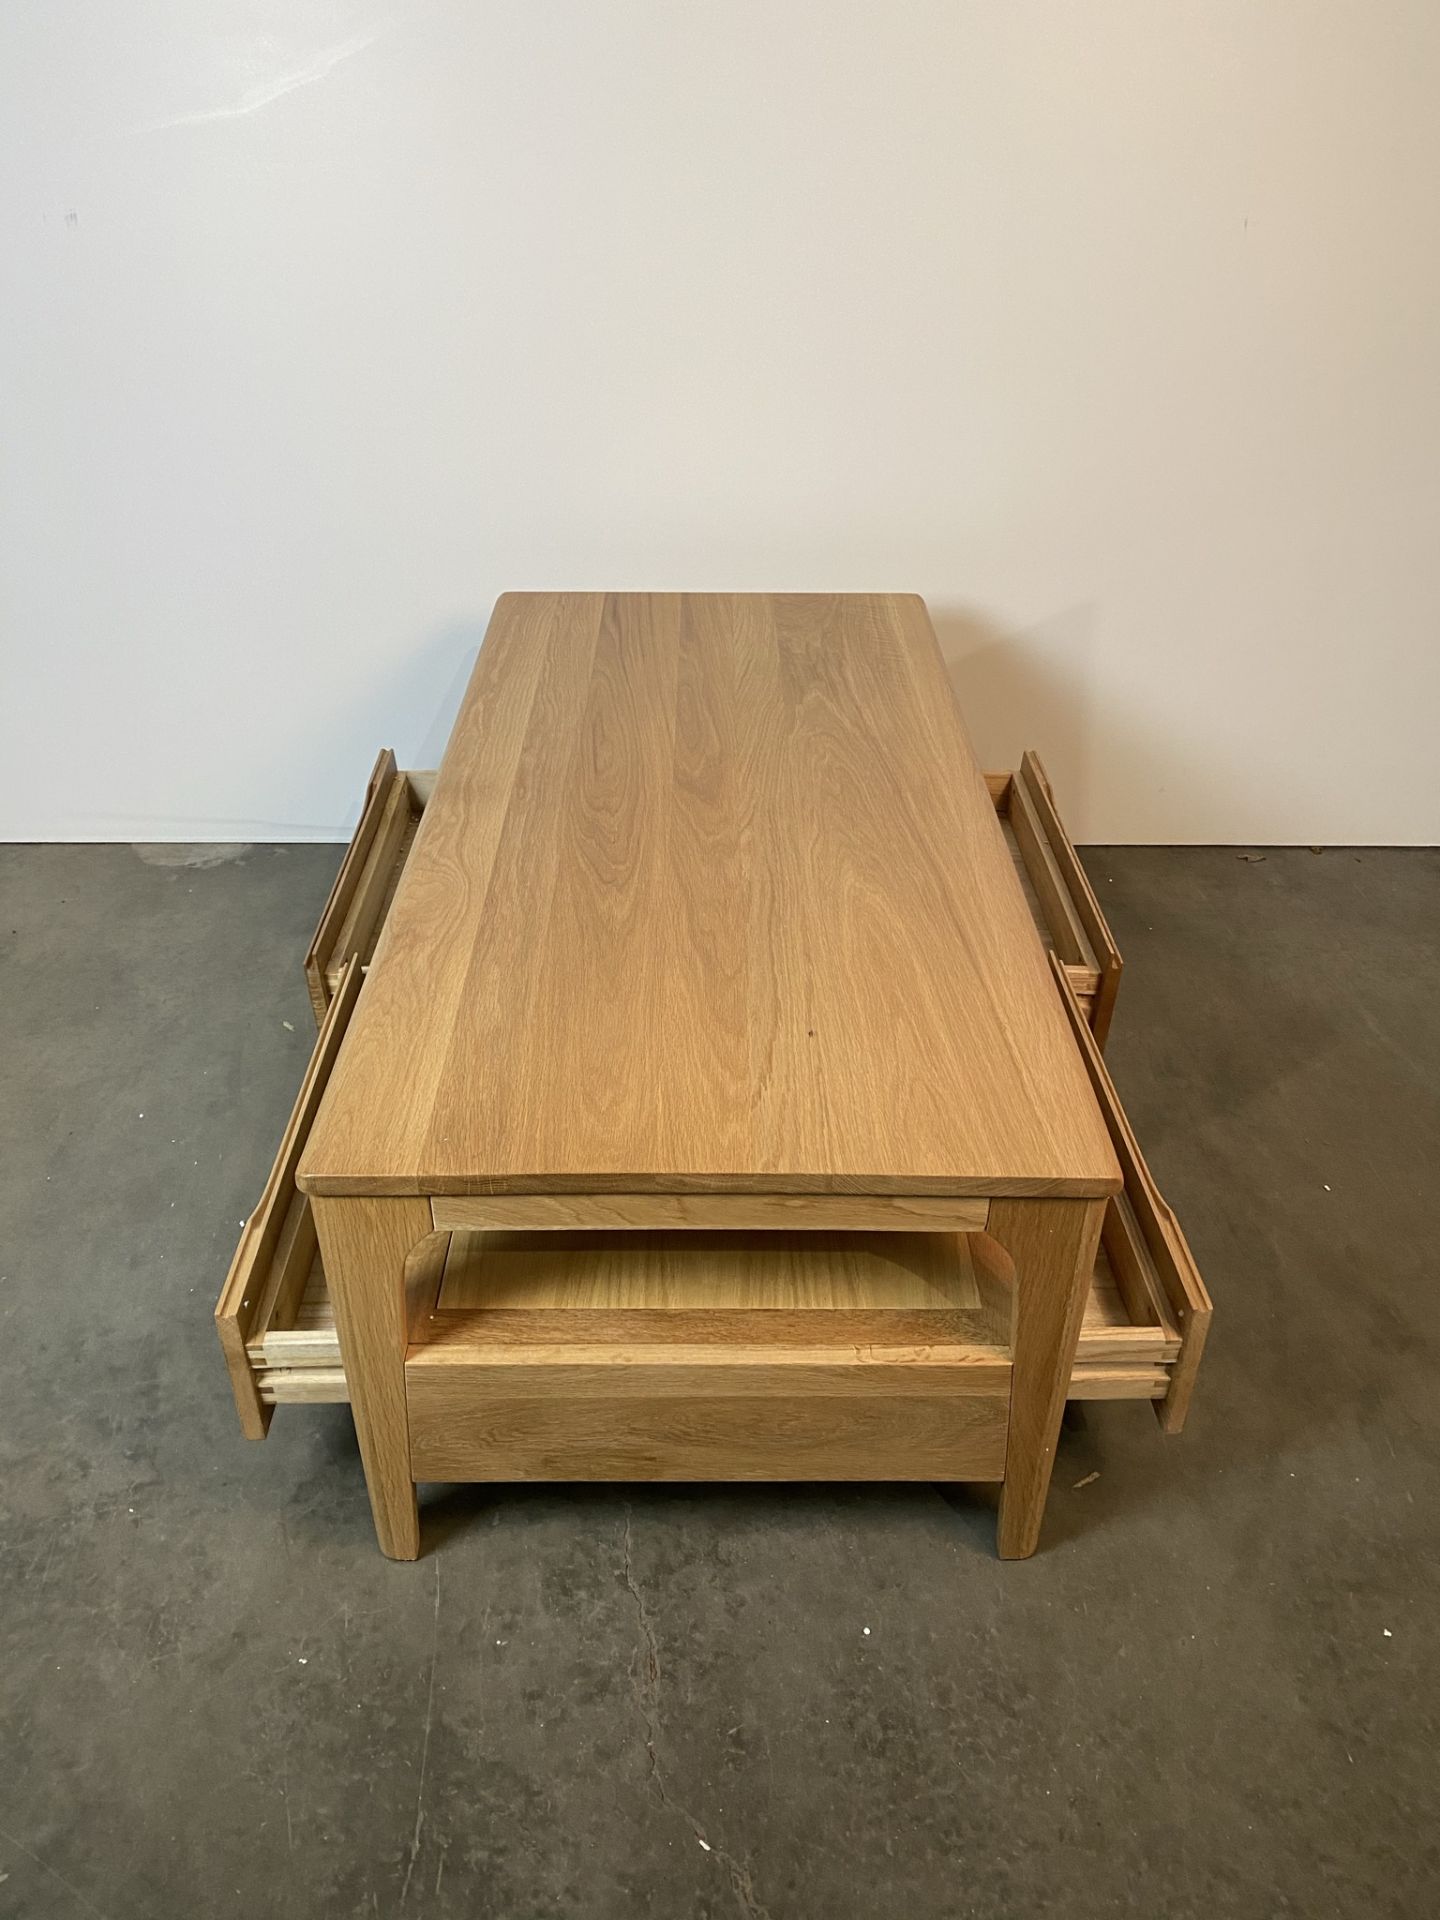 An Solid Oak + Phoenix 4 drawer coffee table - 120cm x 60cm x 45 cm - Image 8 of 10